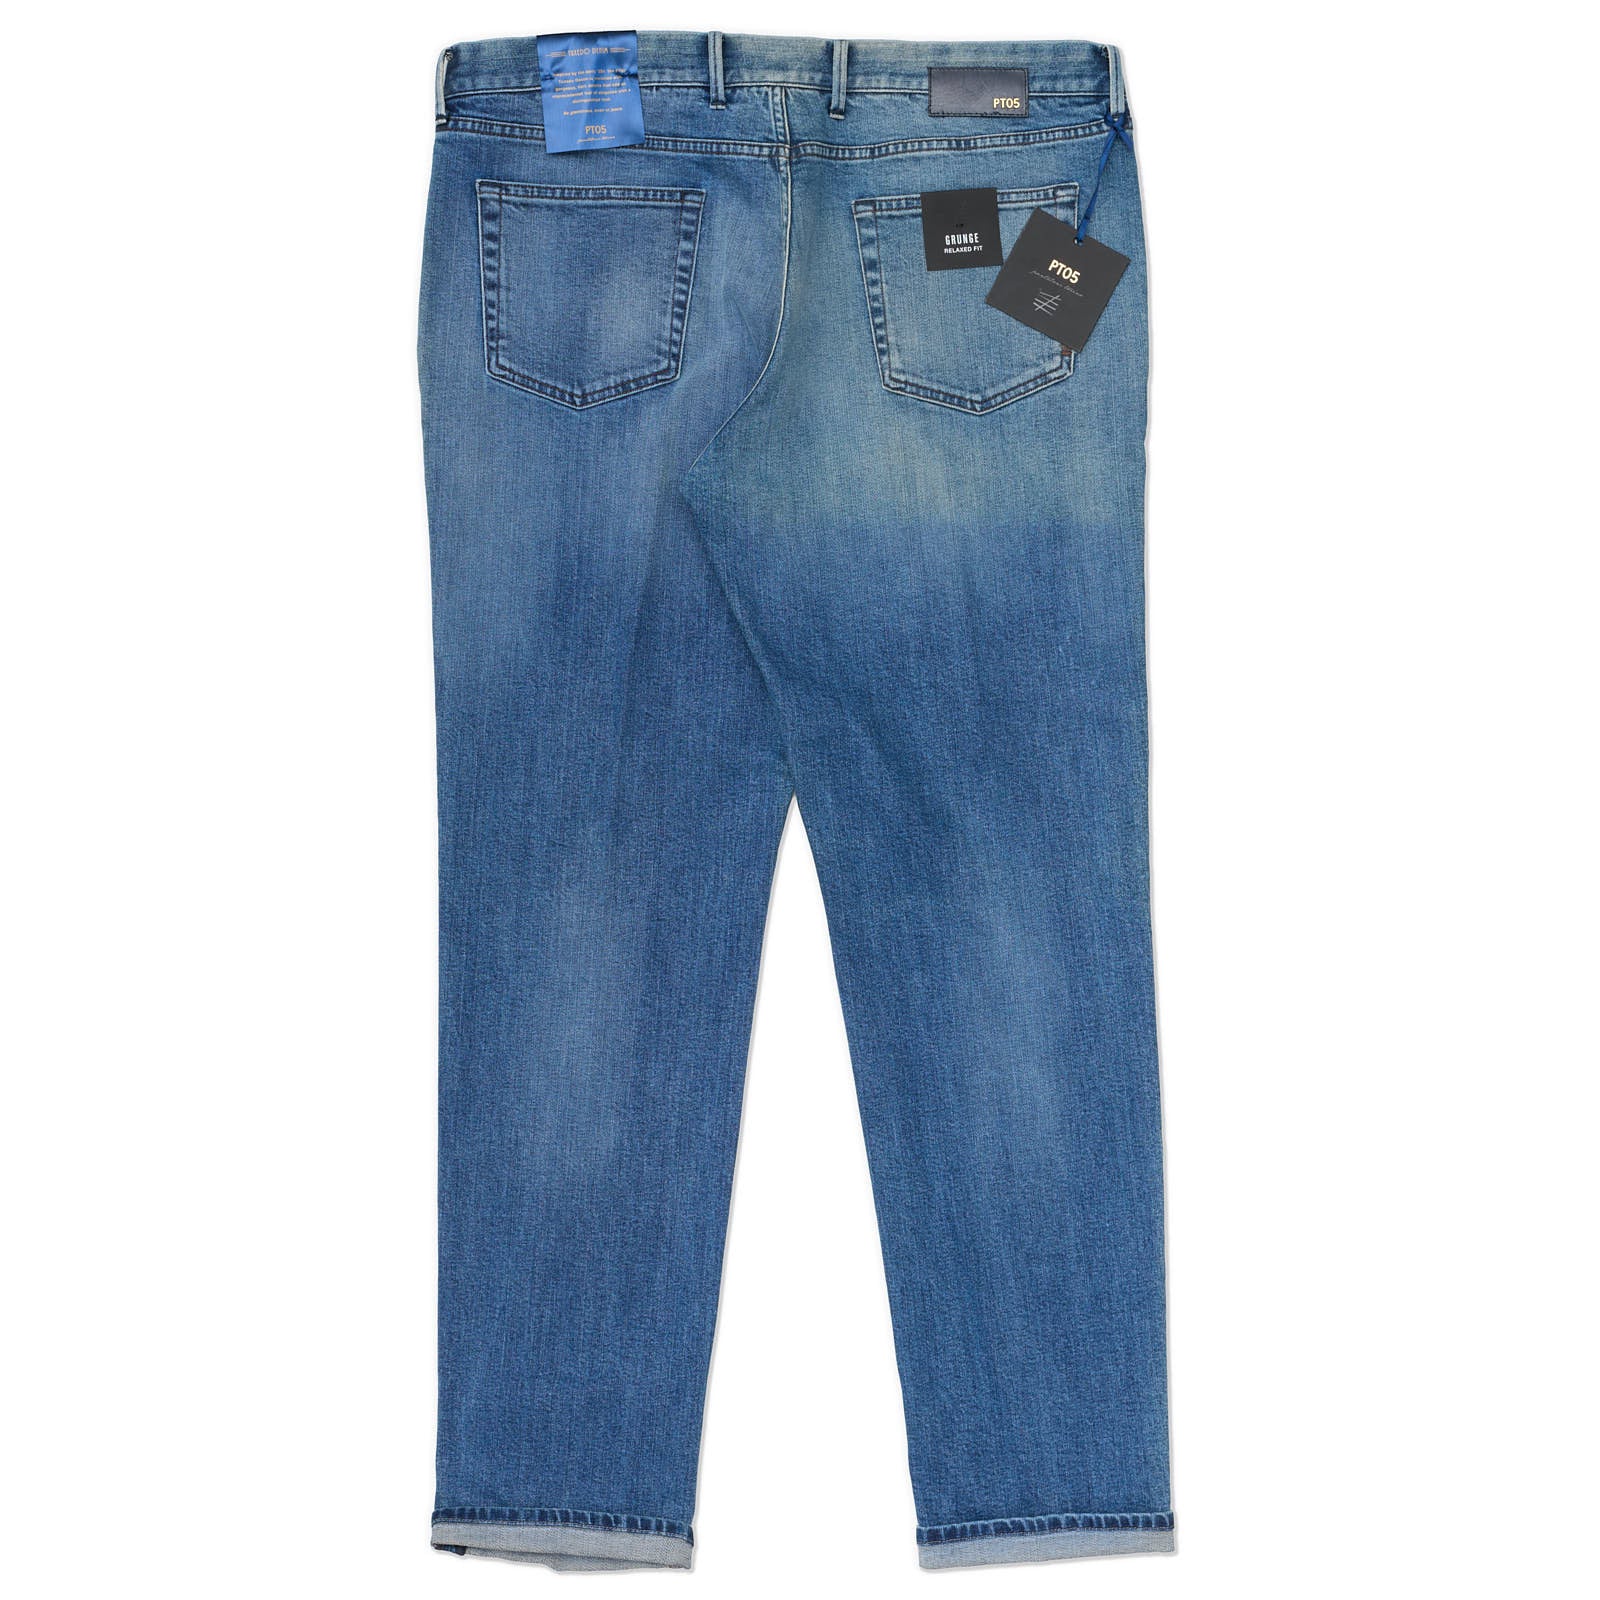 PT05  "Grunge" Light Blue Cotton Tuxedo Denim Relaxed Fit Jeans Pants NEW US 40